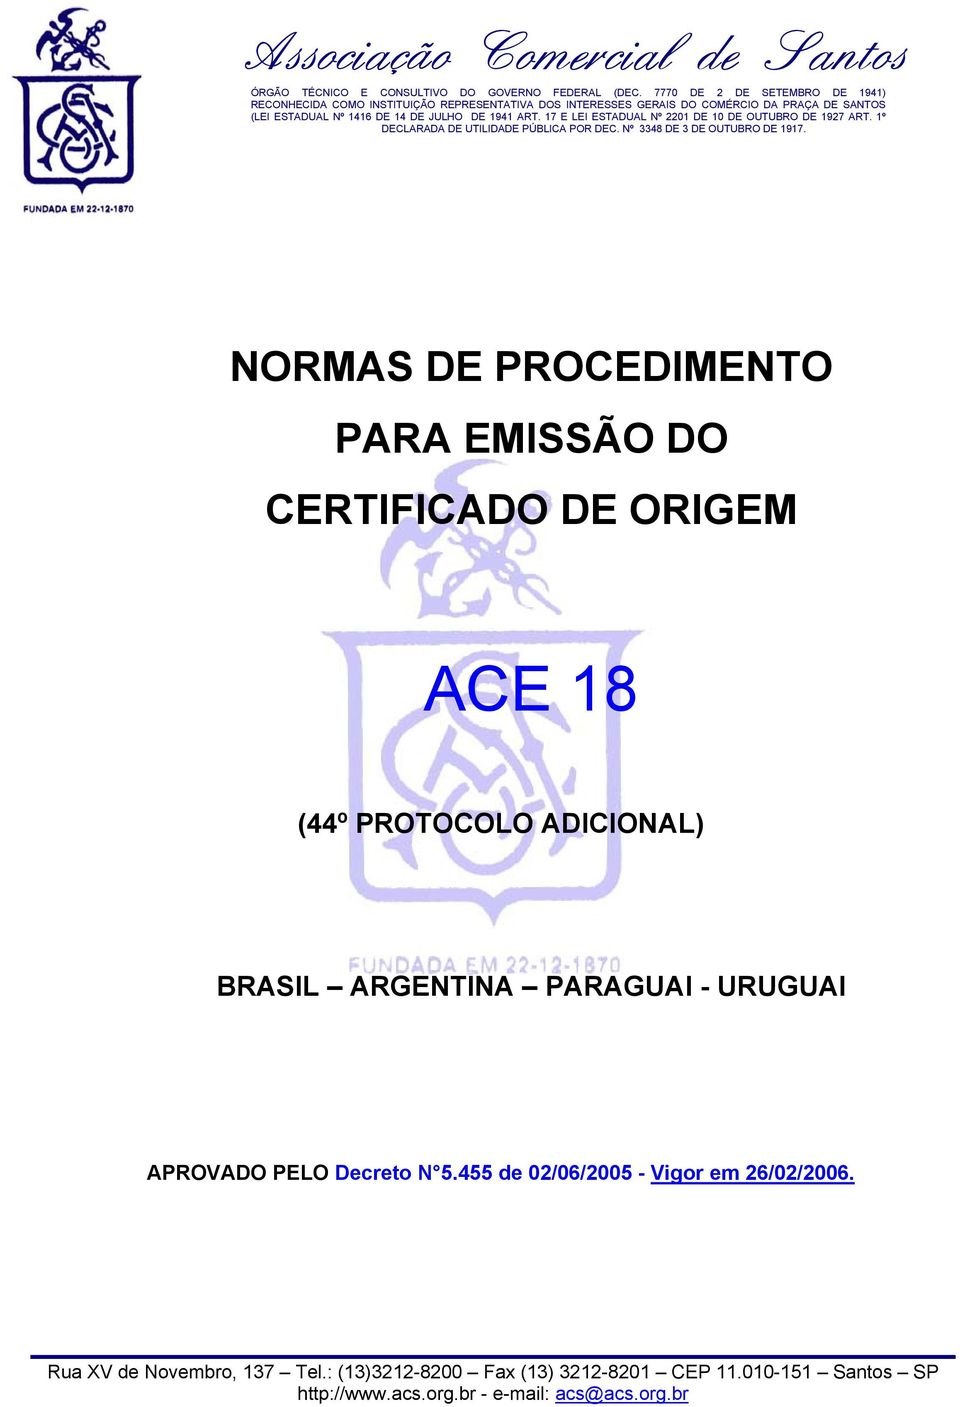 ADICIONAL) BRASIL ARGENTINA PARAGUAI - URUGUAI